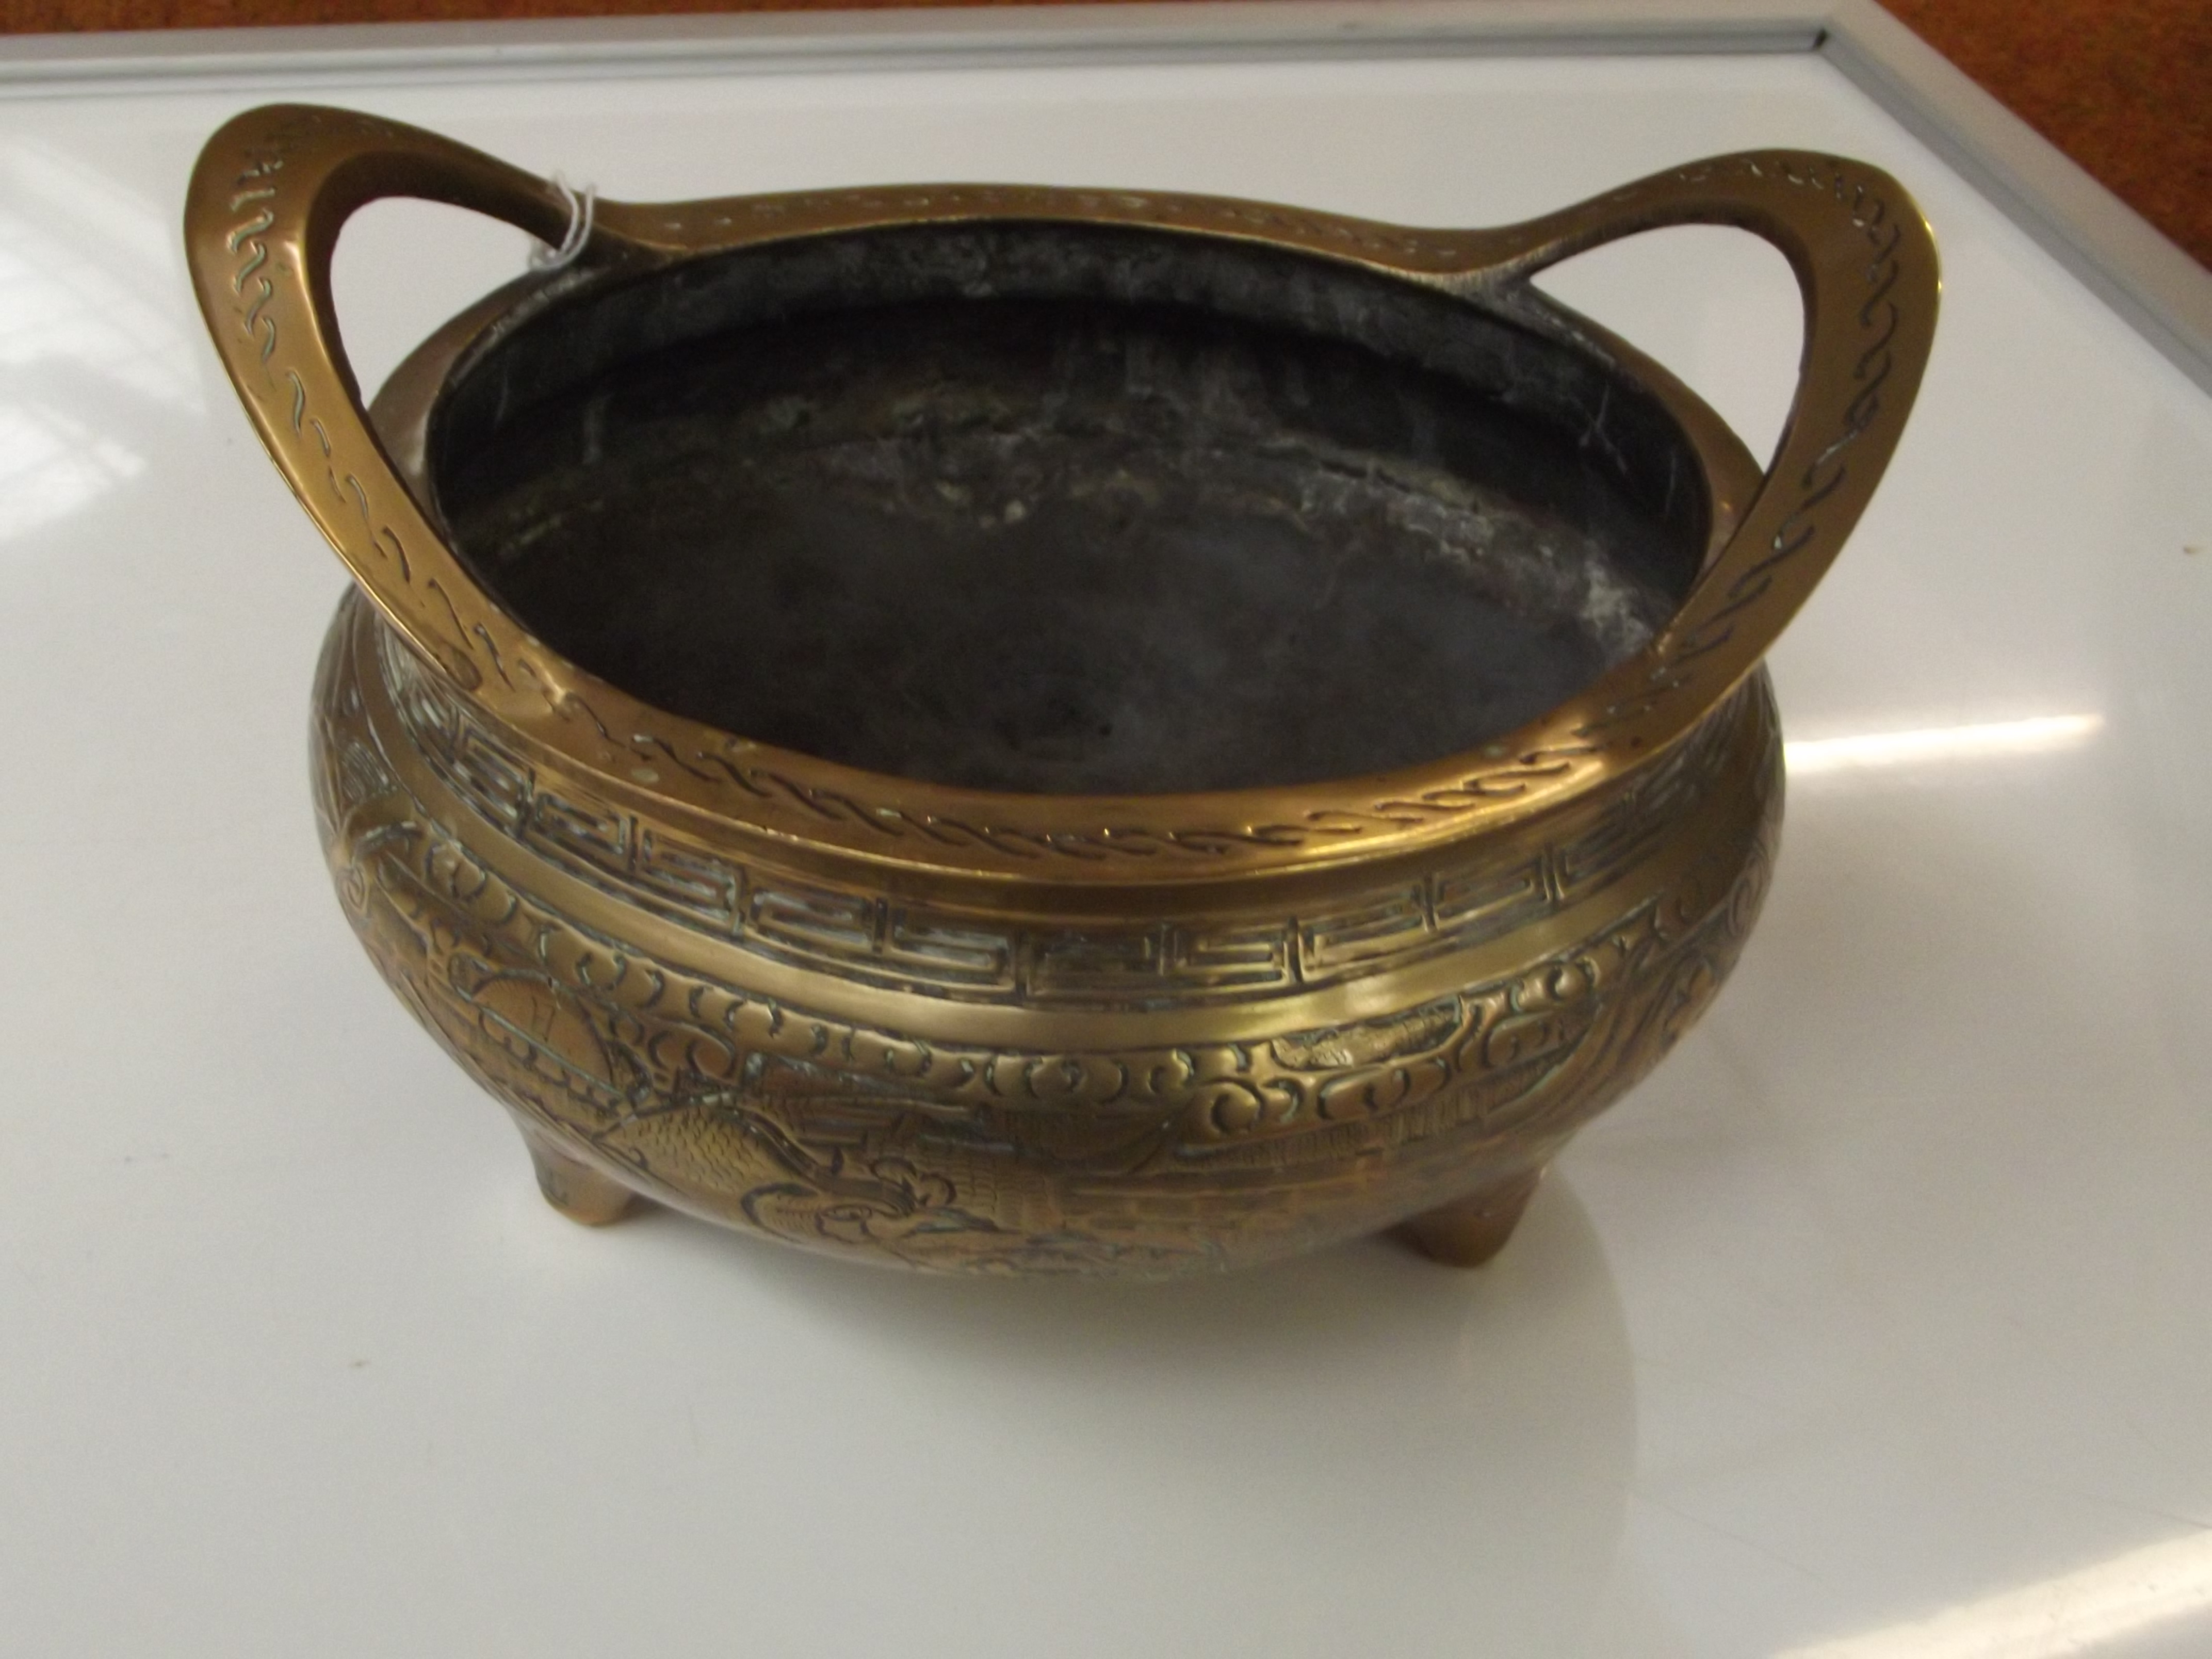 Heavy brass Chinese bowl